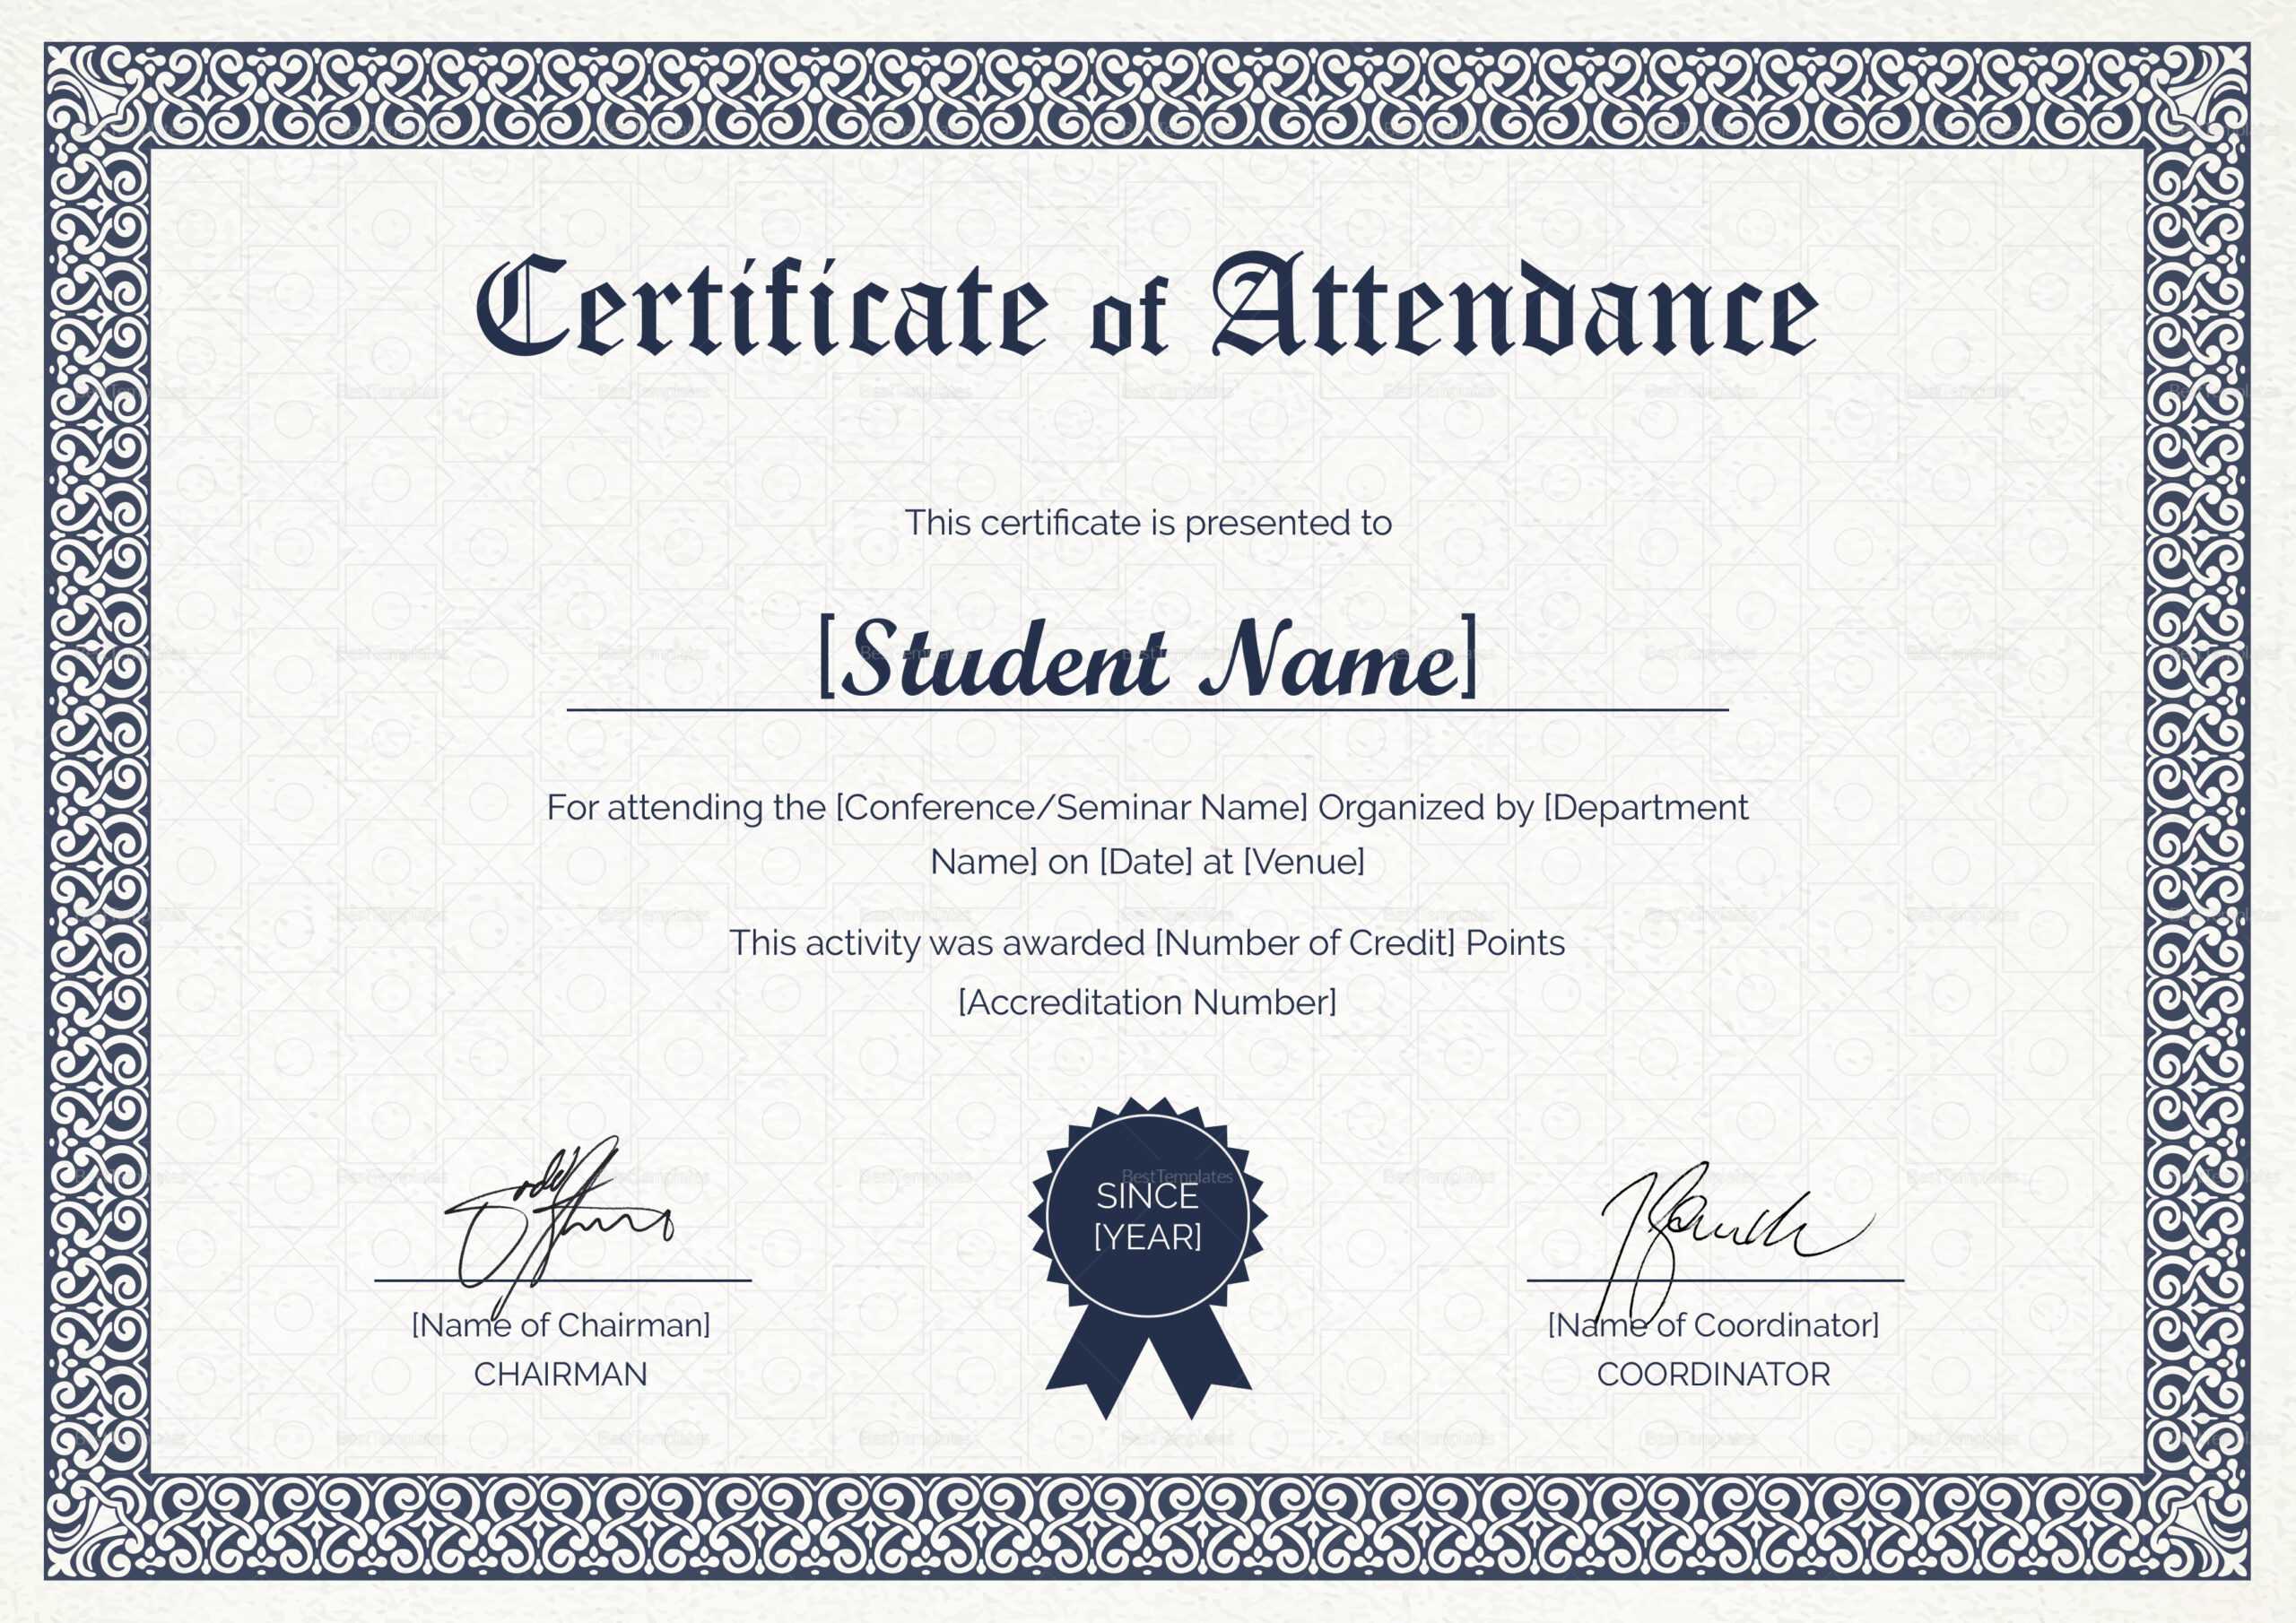 Students Attendance Certificate Template Within Conference Certificate Of Attendance Template